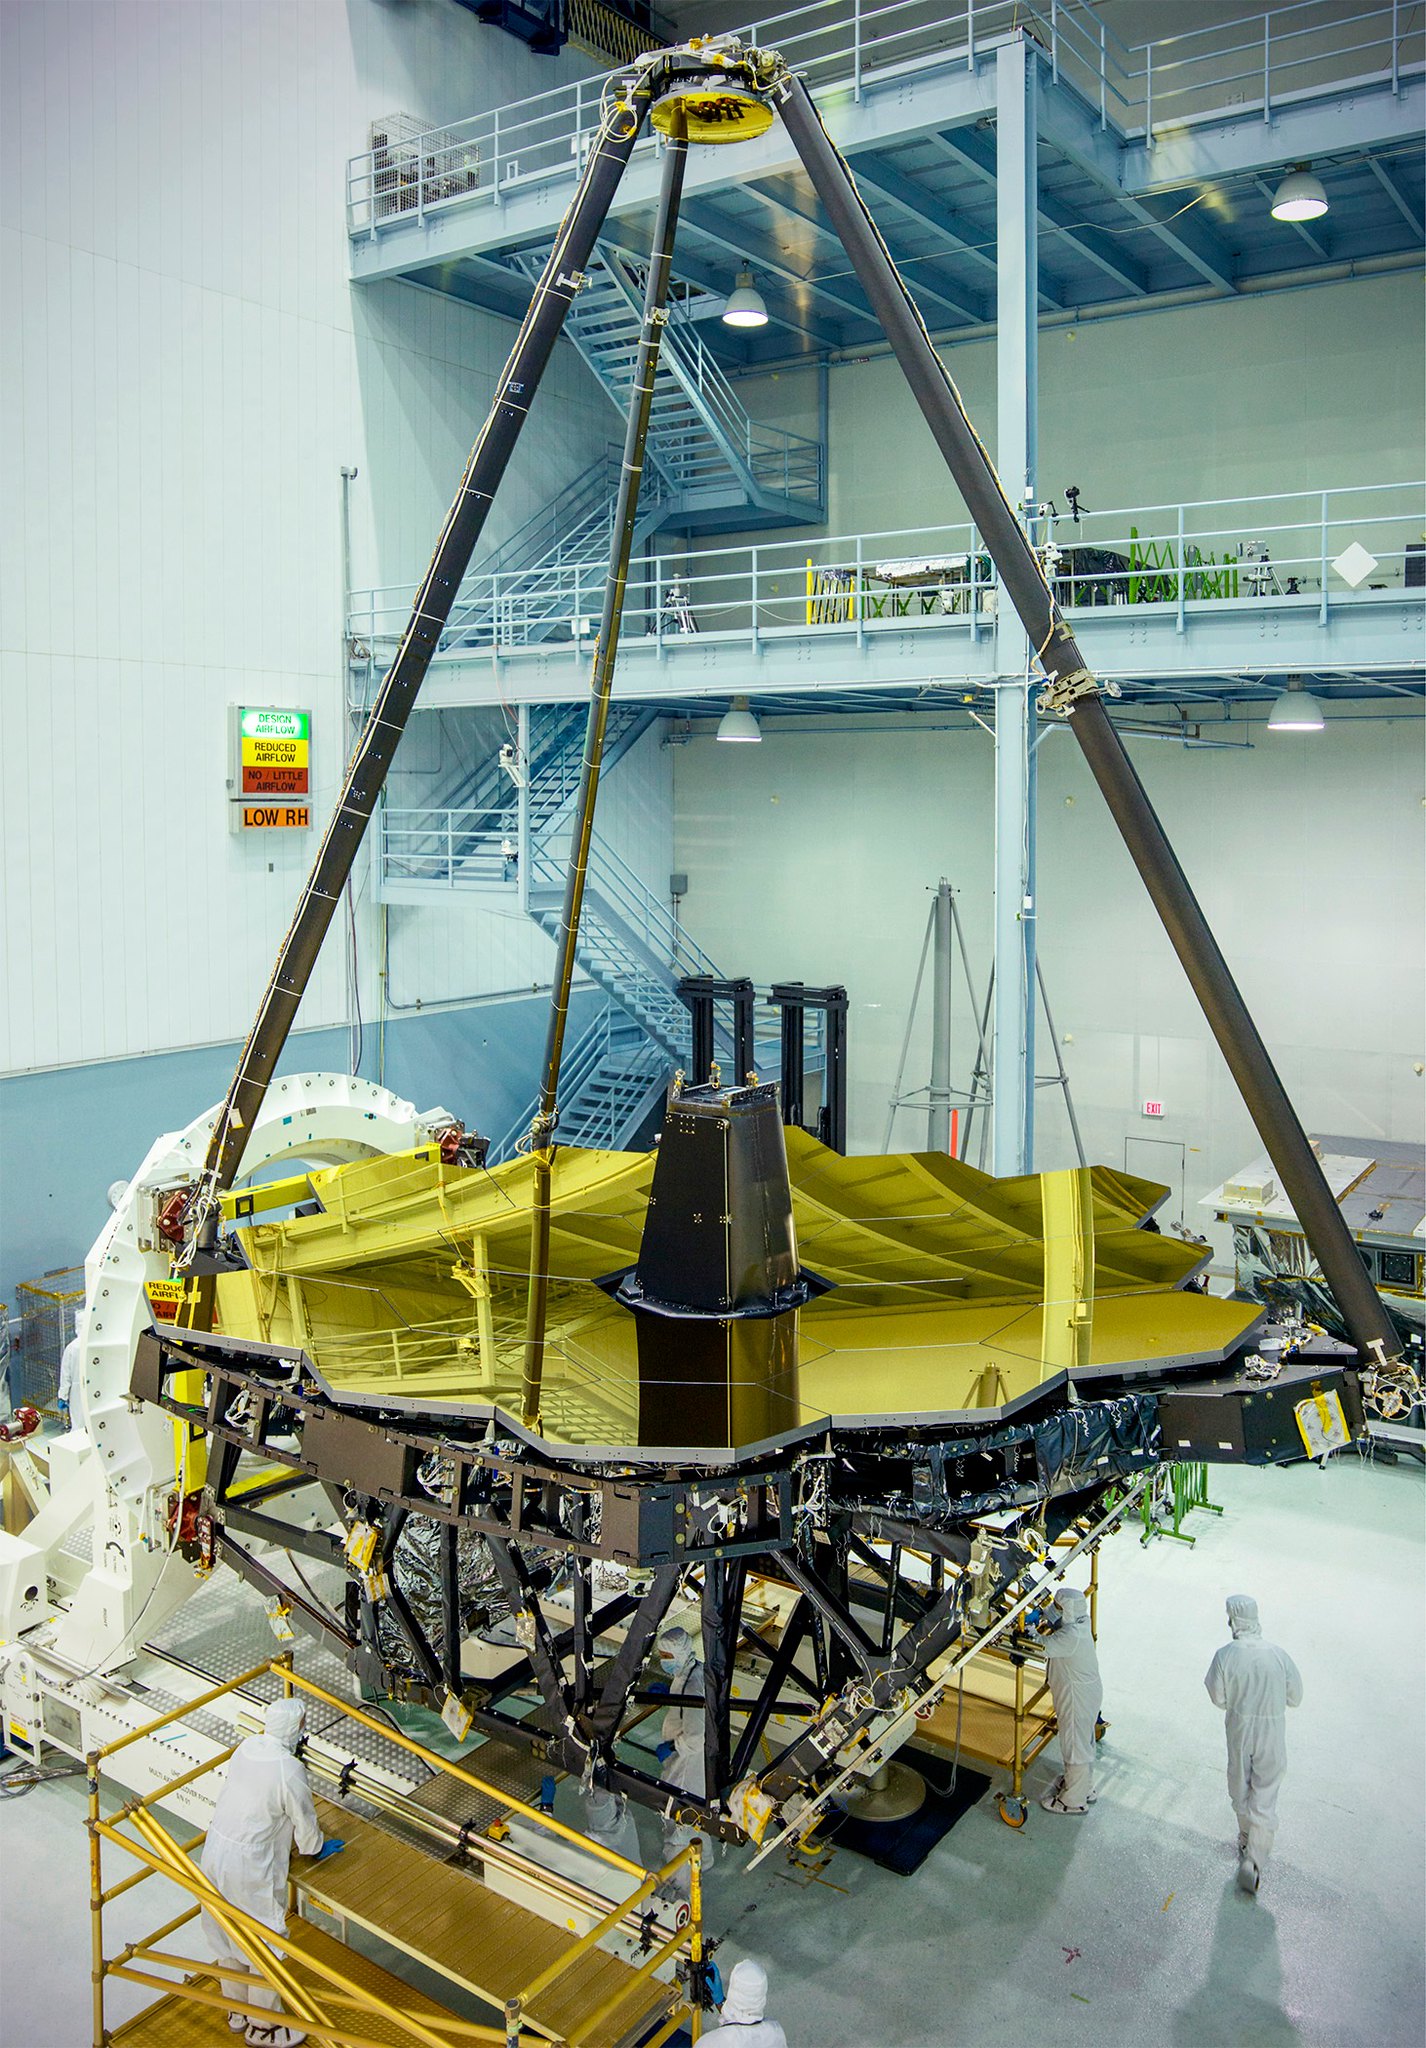 An image "Goldeneye" view of James Webb Telescope